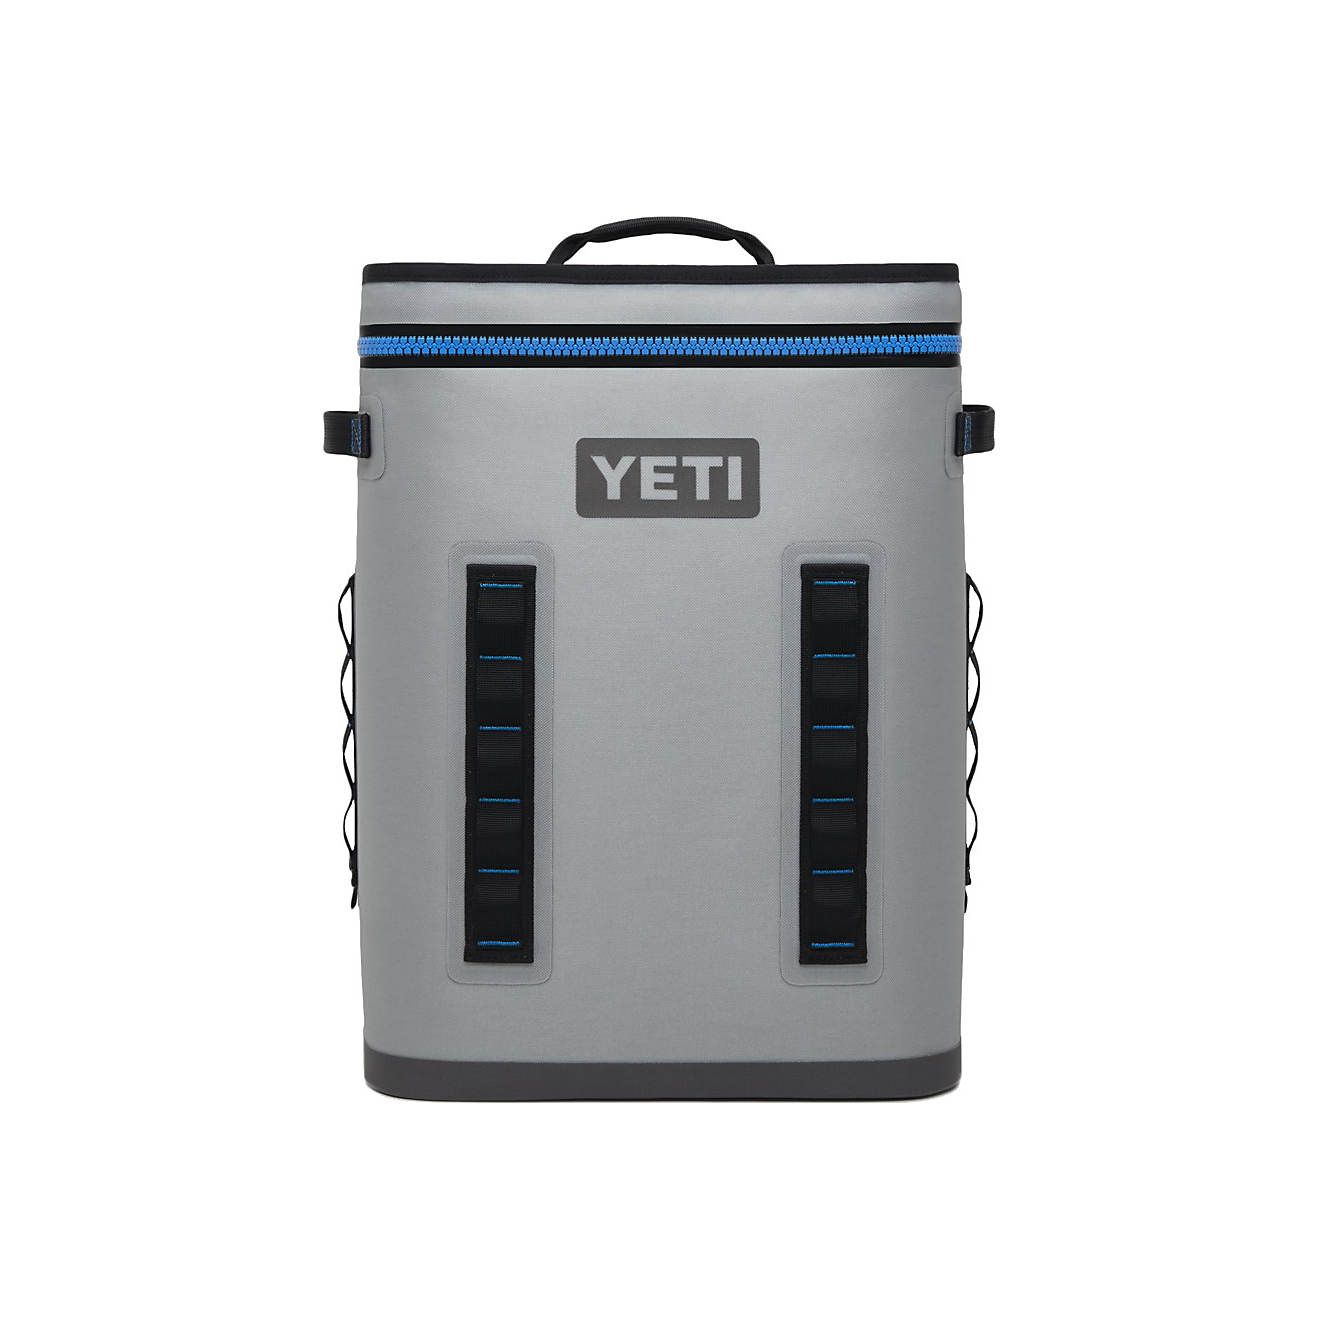 YETI Hopper BackFlip 24 Cooler | Academy Sports + Outdoor Affiliate